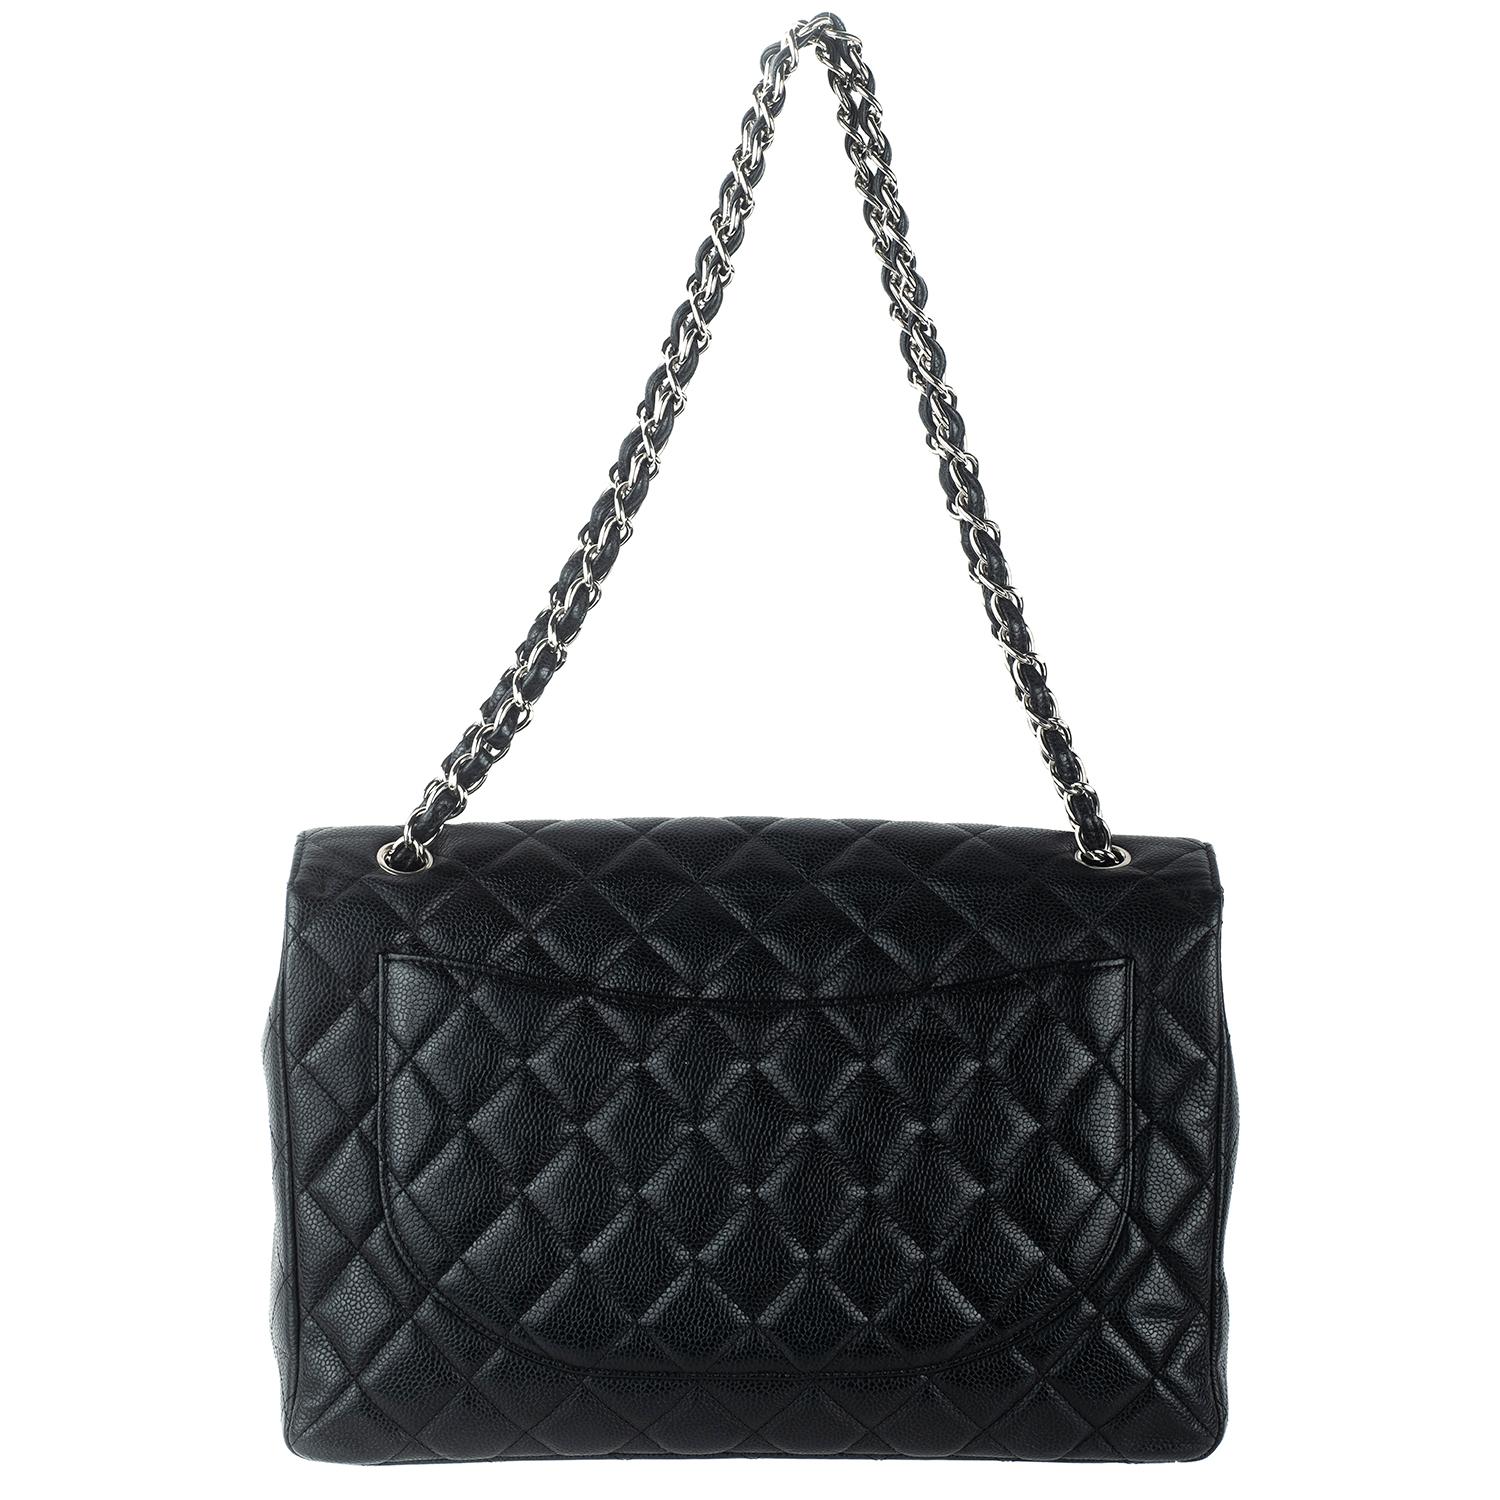 My Sister's Closet | Chanel Chanel Large Black Caviar Leather Maxi Flap  Silver CC Handbag